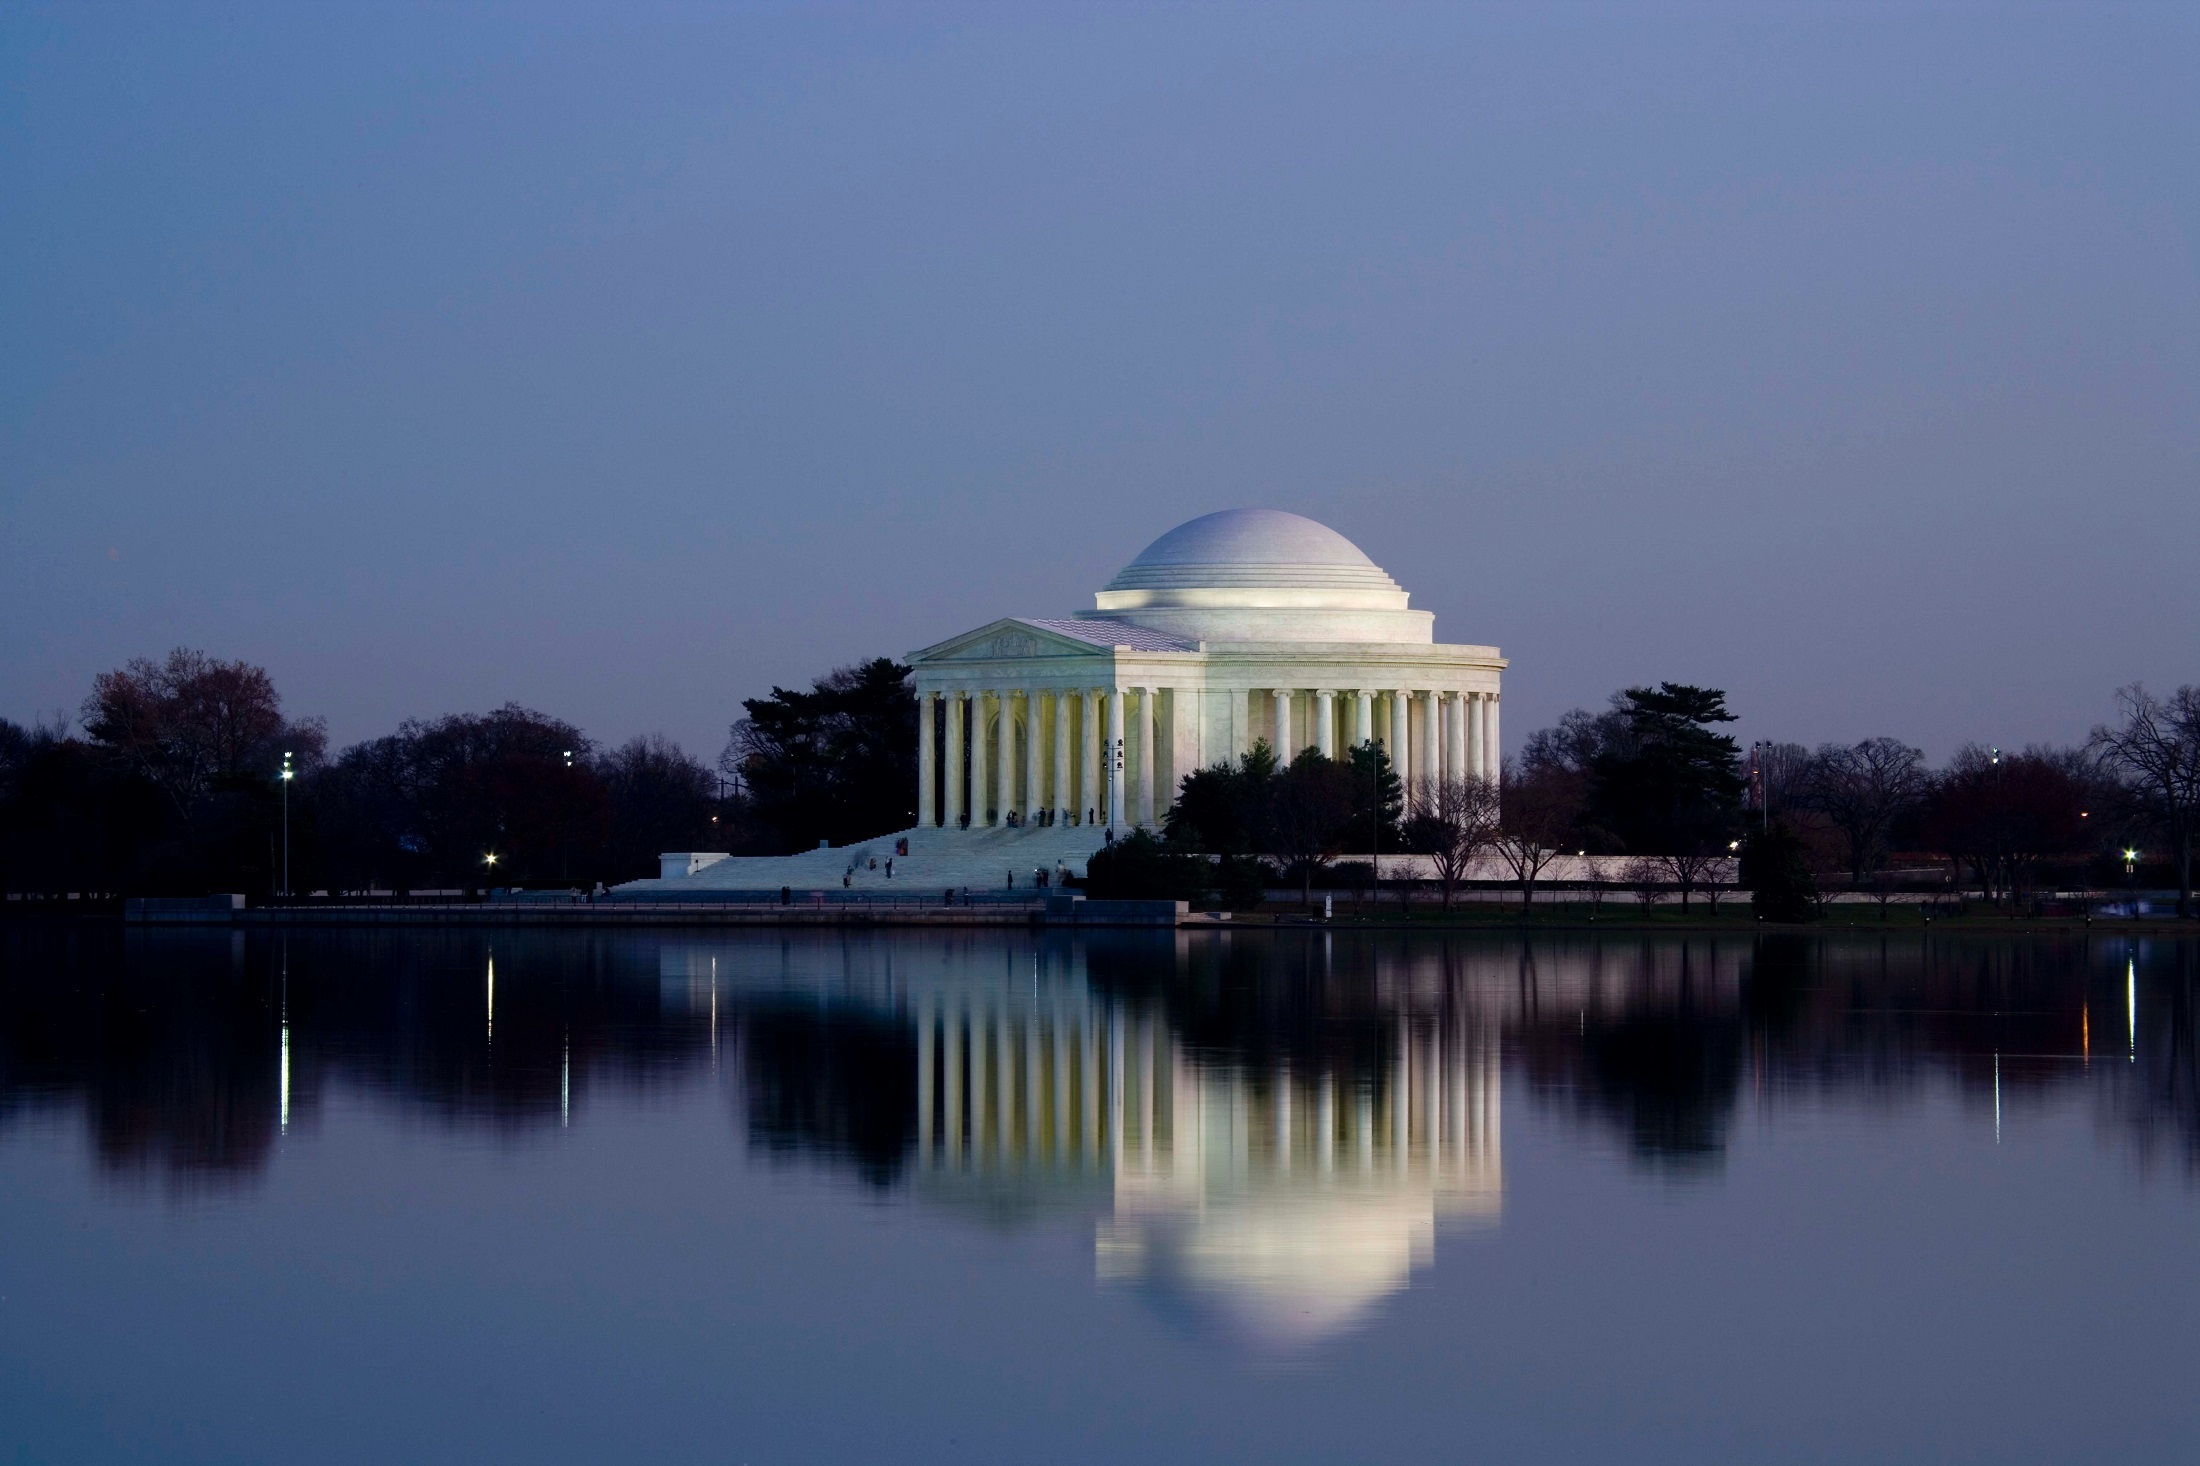 2200x1466 Thomas Jefferson Memorial in Washington, by skeeze